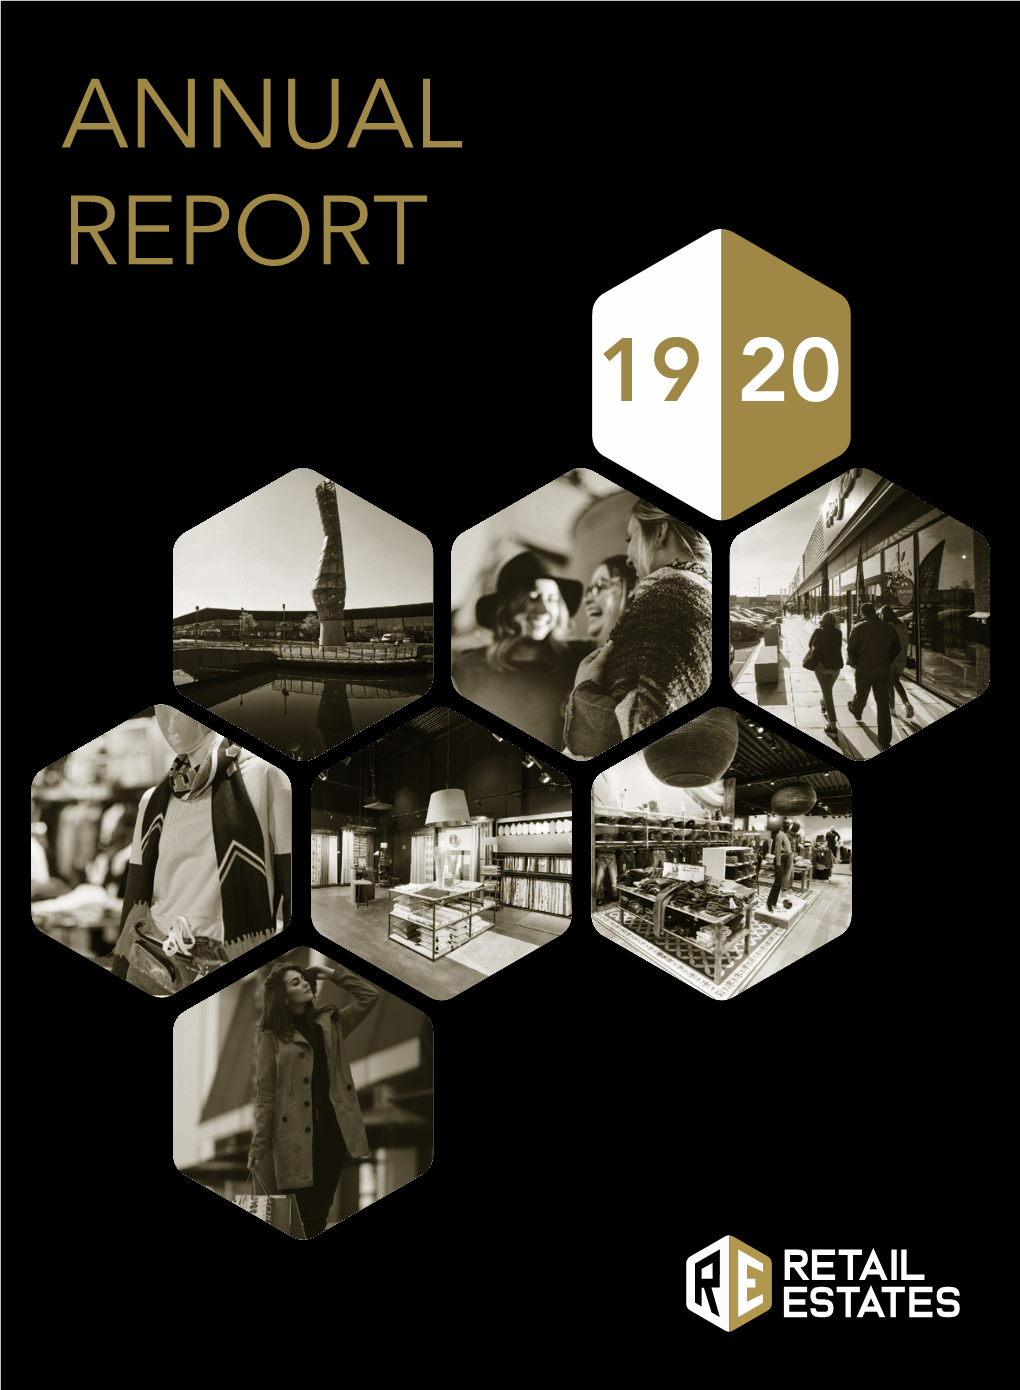 Annual Report 19 20